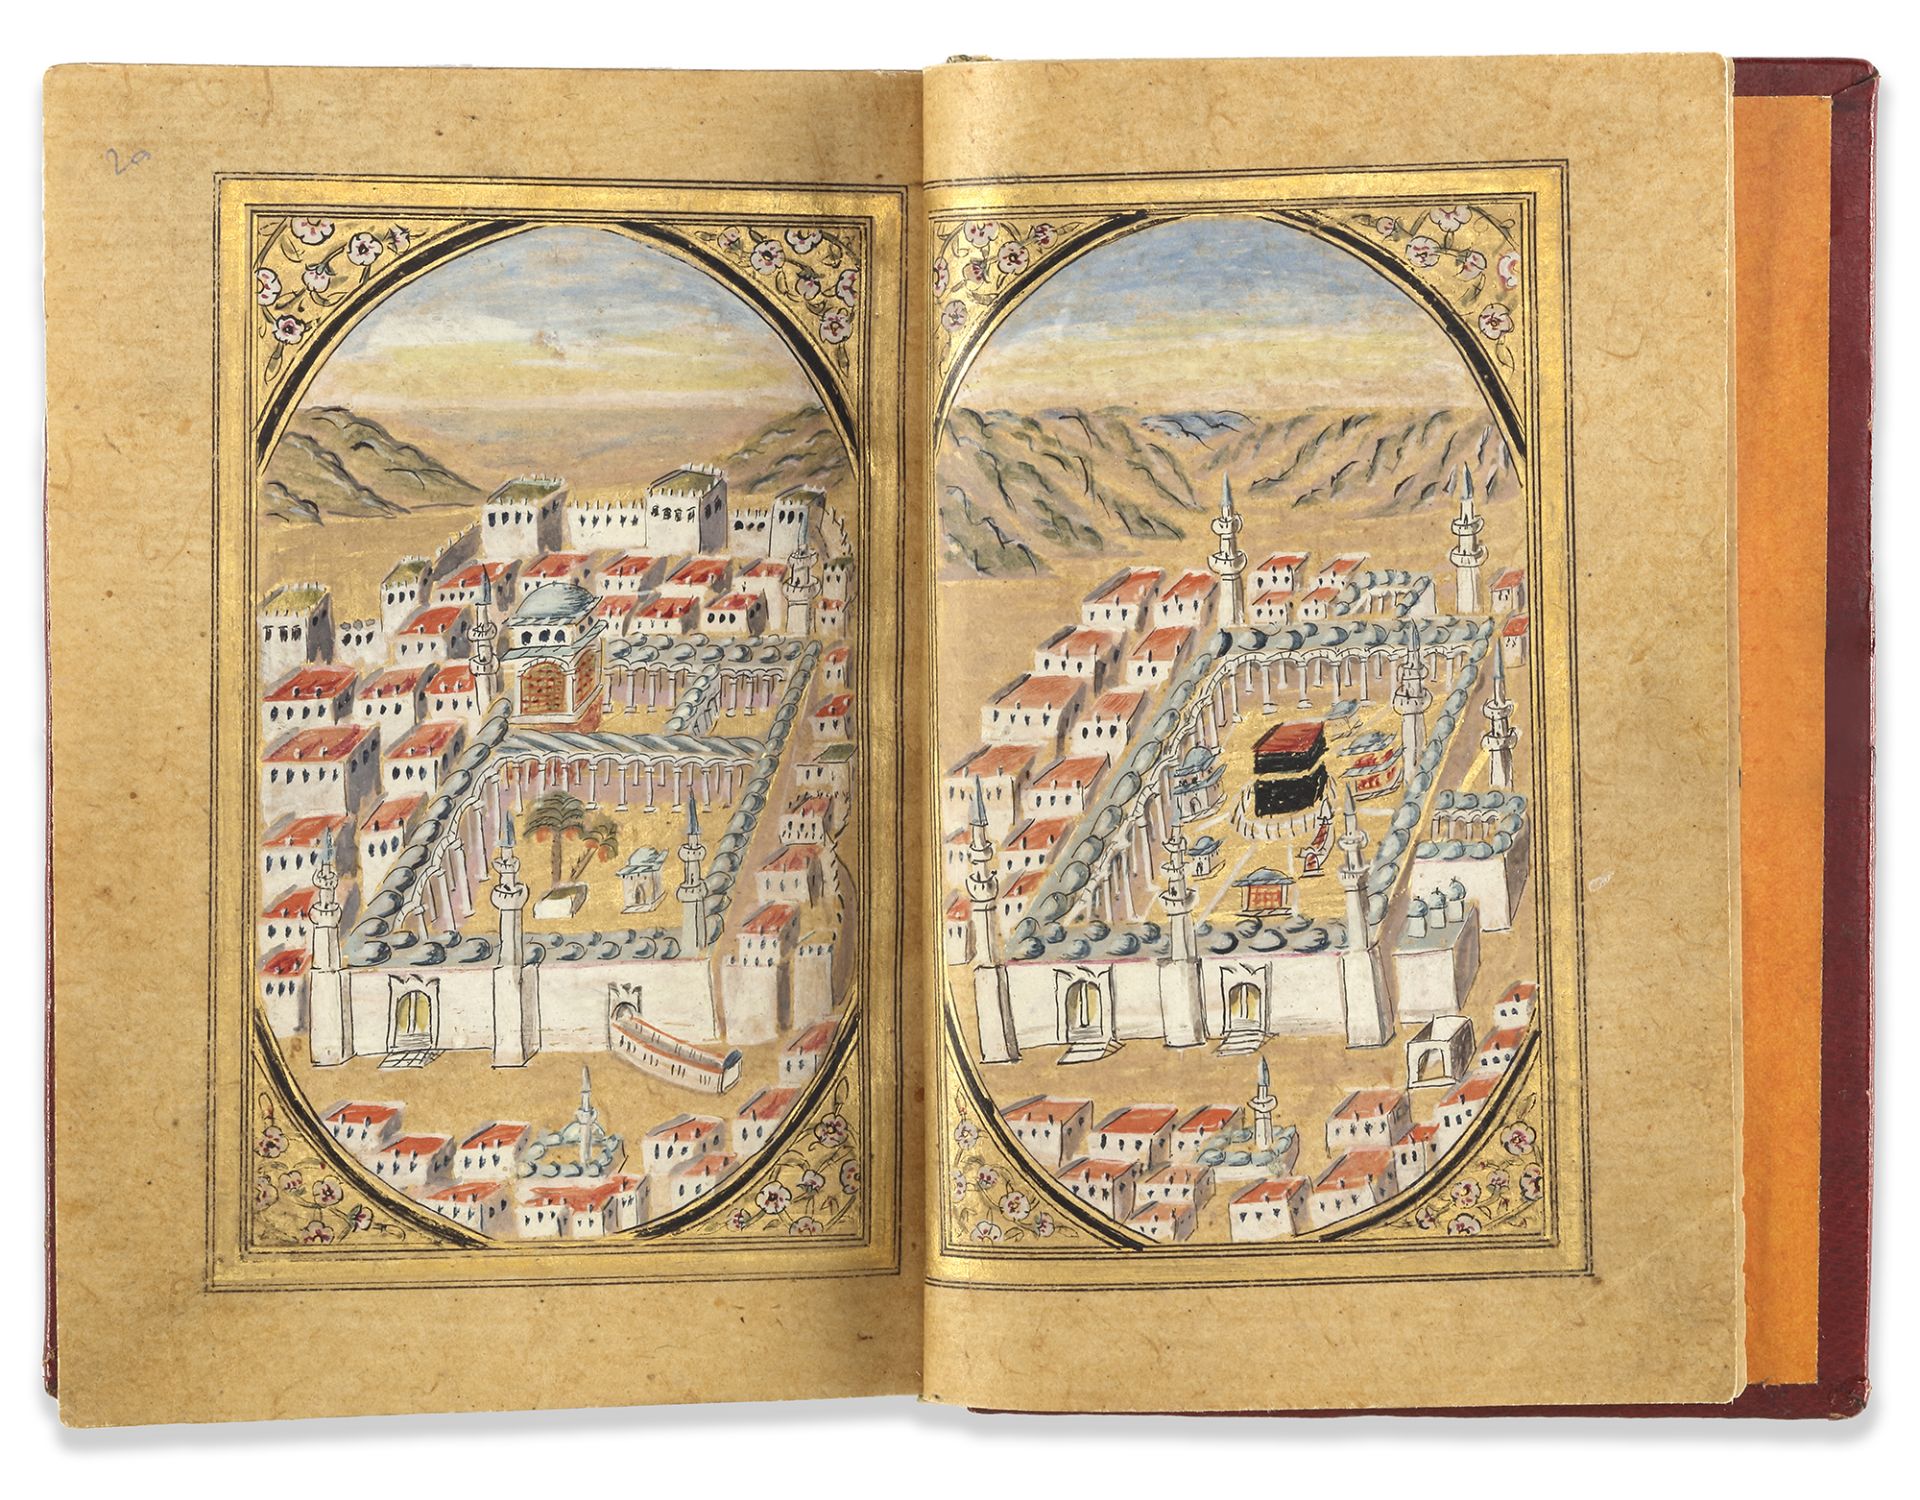 AN OTTOMAN PRAYER BOOK SIGNED BY IBRAHIM BERBERZADE, TURKEY, DATED 1179 AH/1765 AD